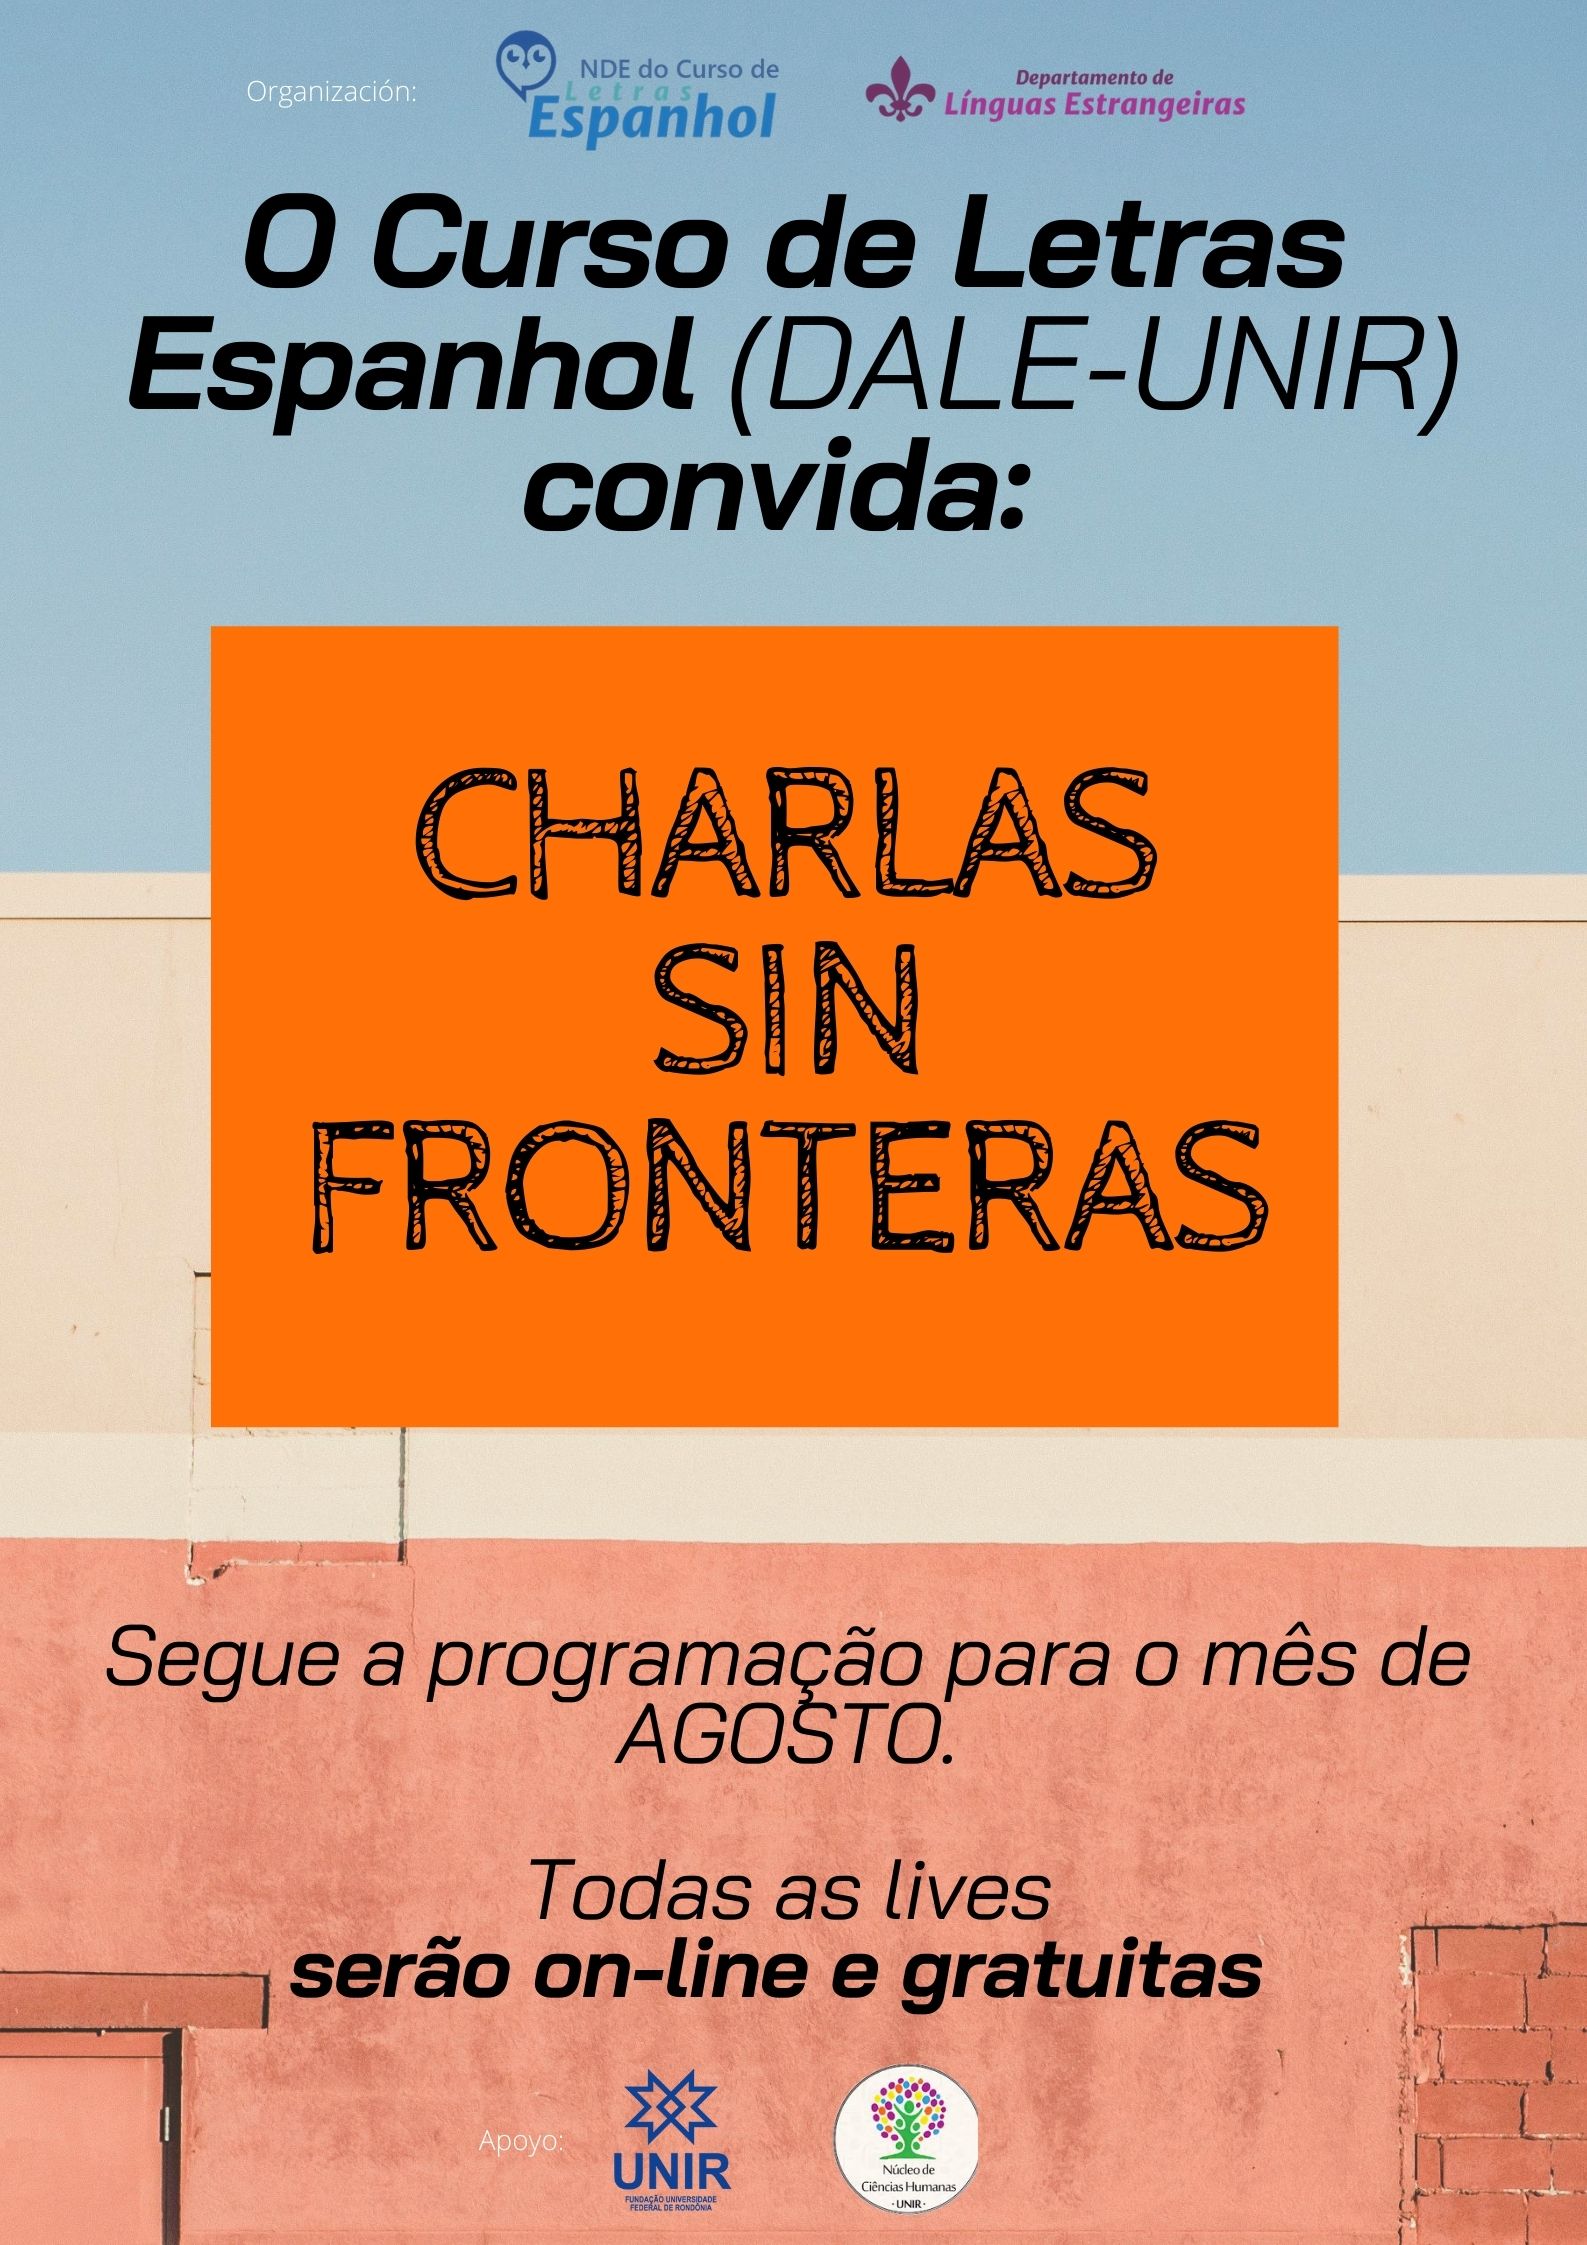 Charlas sin fronteras: reflexões sobre língua, literatura e